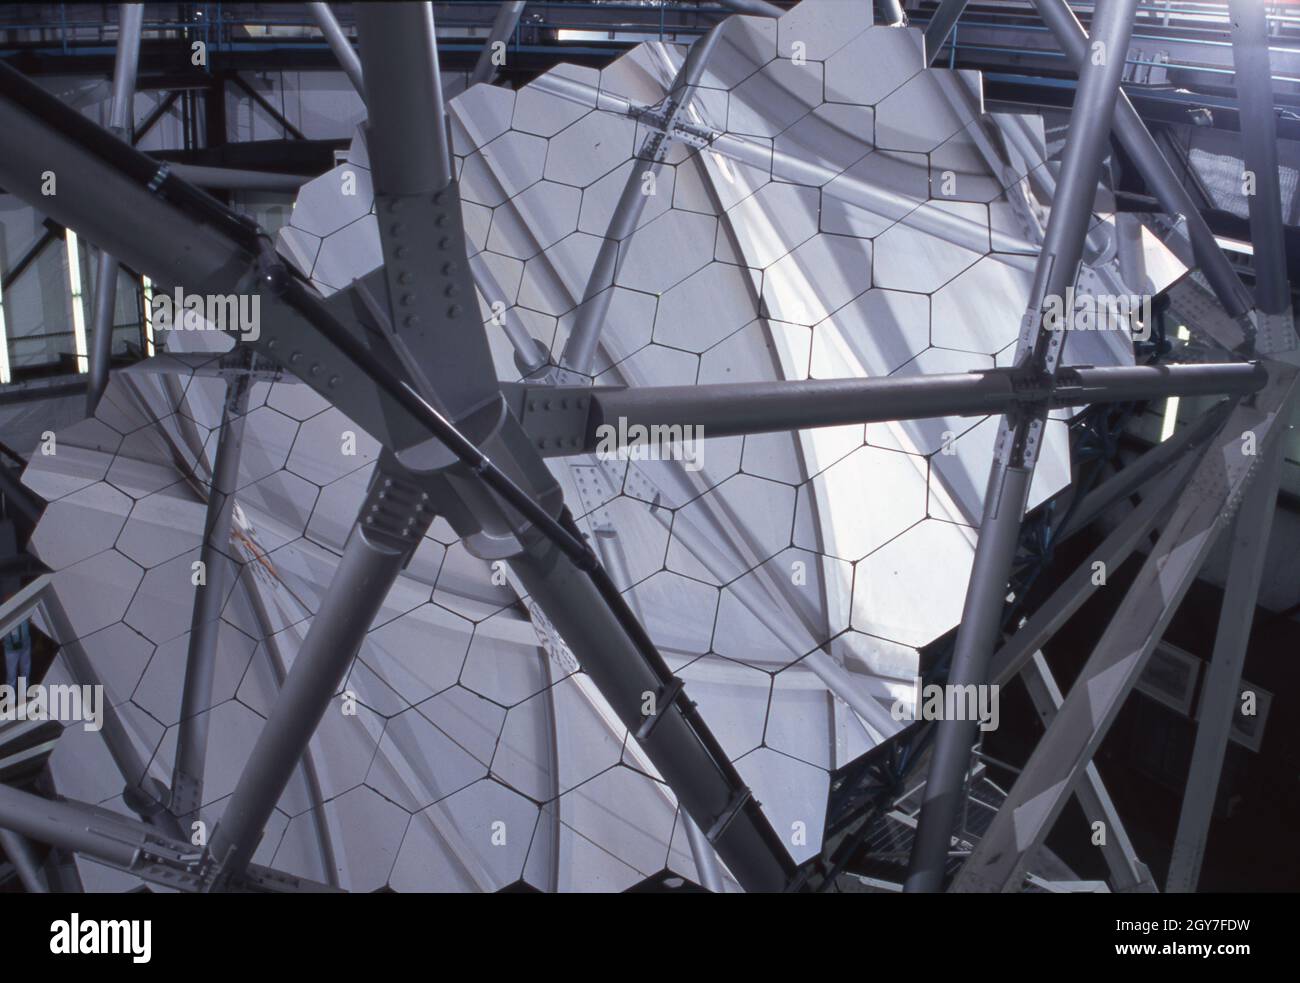 Jeff Davis County Texas, USA, Oktober 1997: Teil des Spiegels des 432-Zoll-Hobby-Eberly-Teleskops am McDonald Observatory der University of Texas Stockfoto